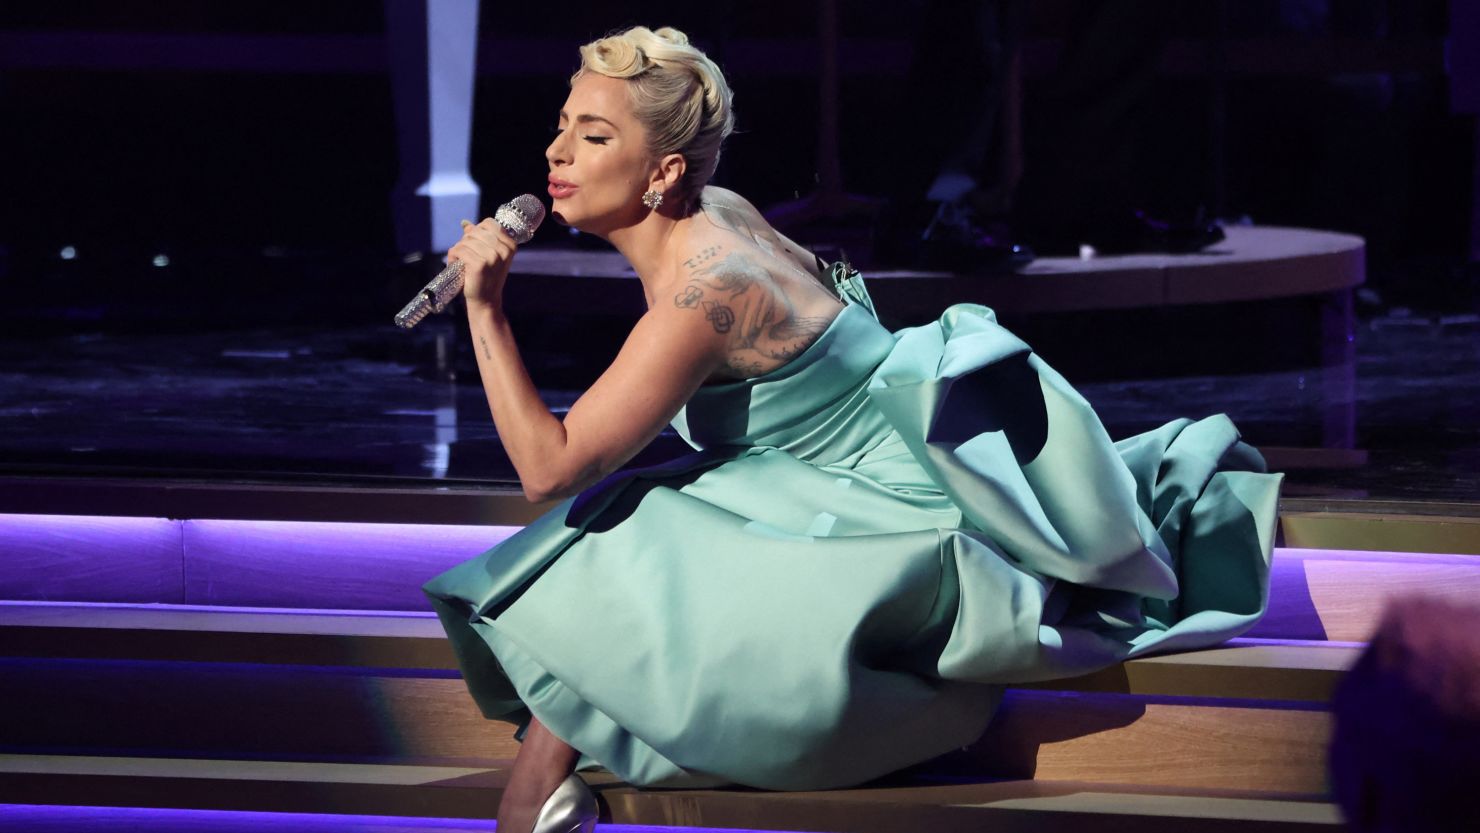 Lady Gaga performing at the 2022 Grammy Awards in Las Vegas.